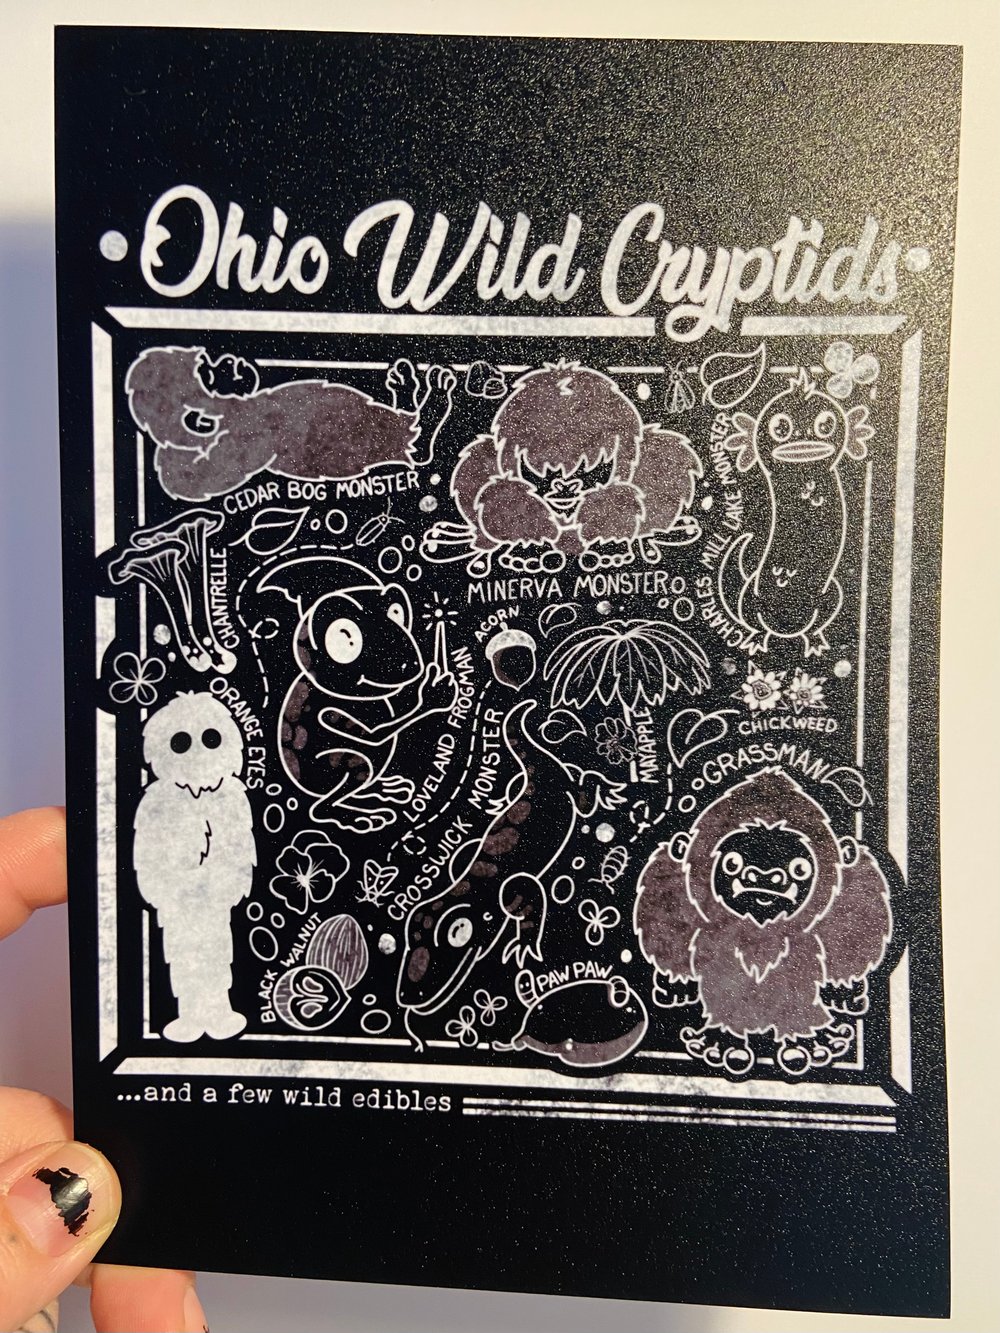 Ohio wild cryptids mini print